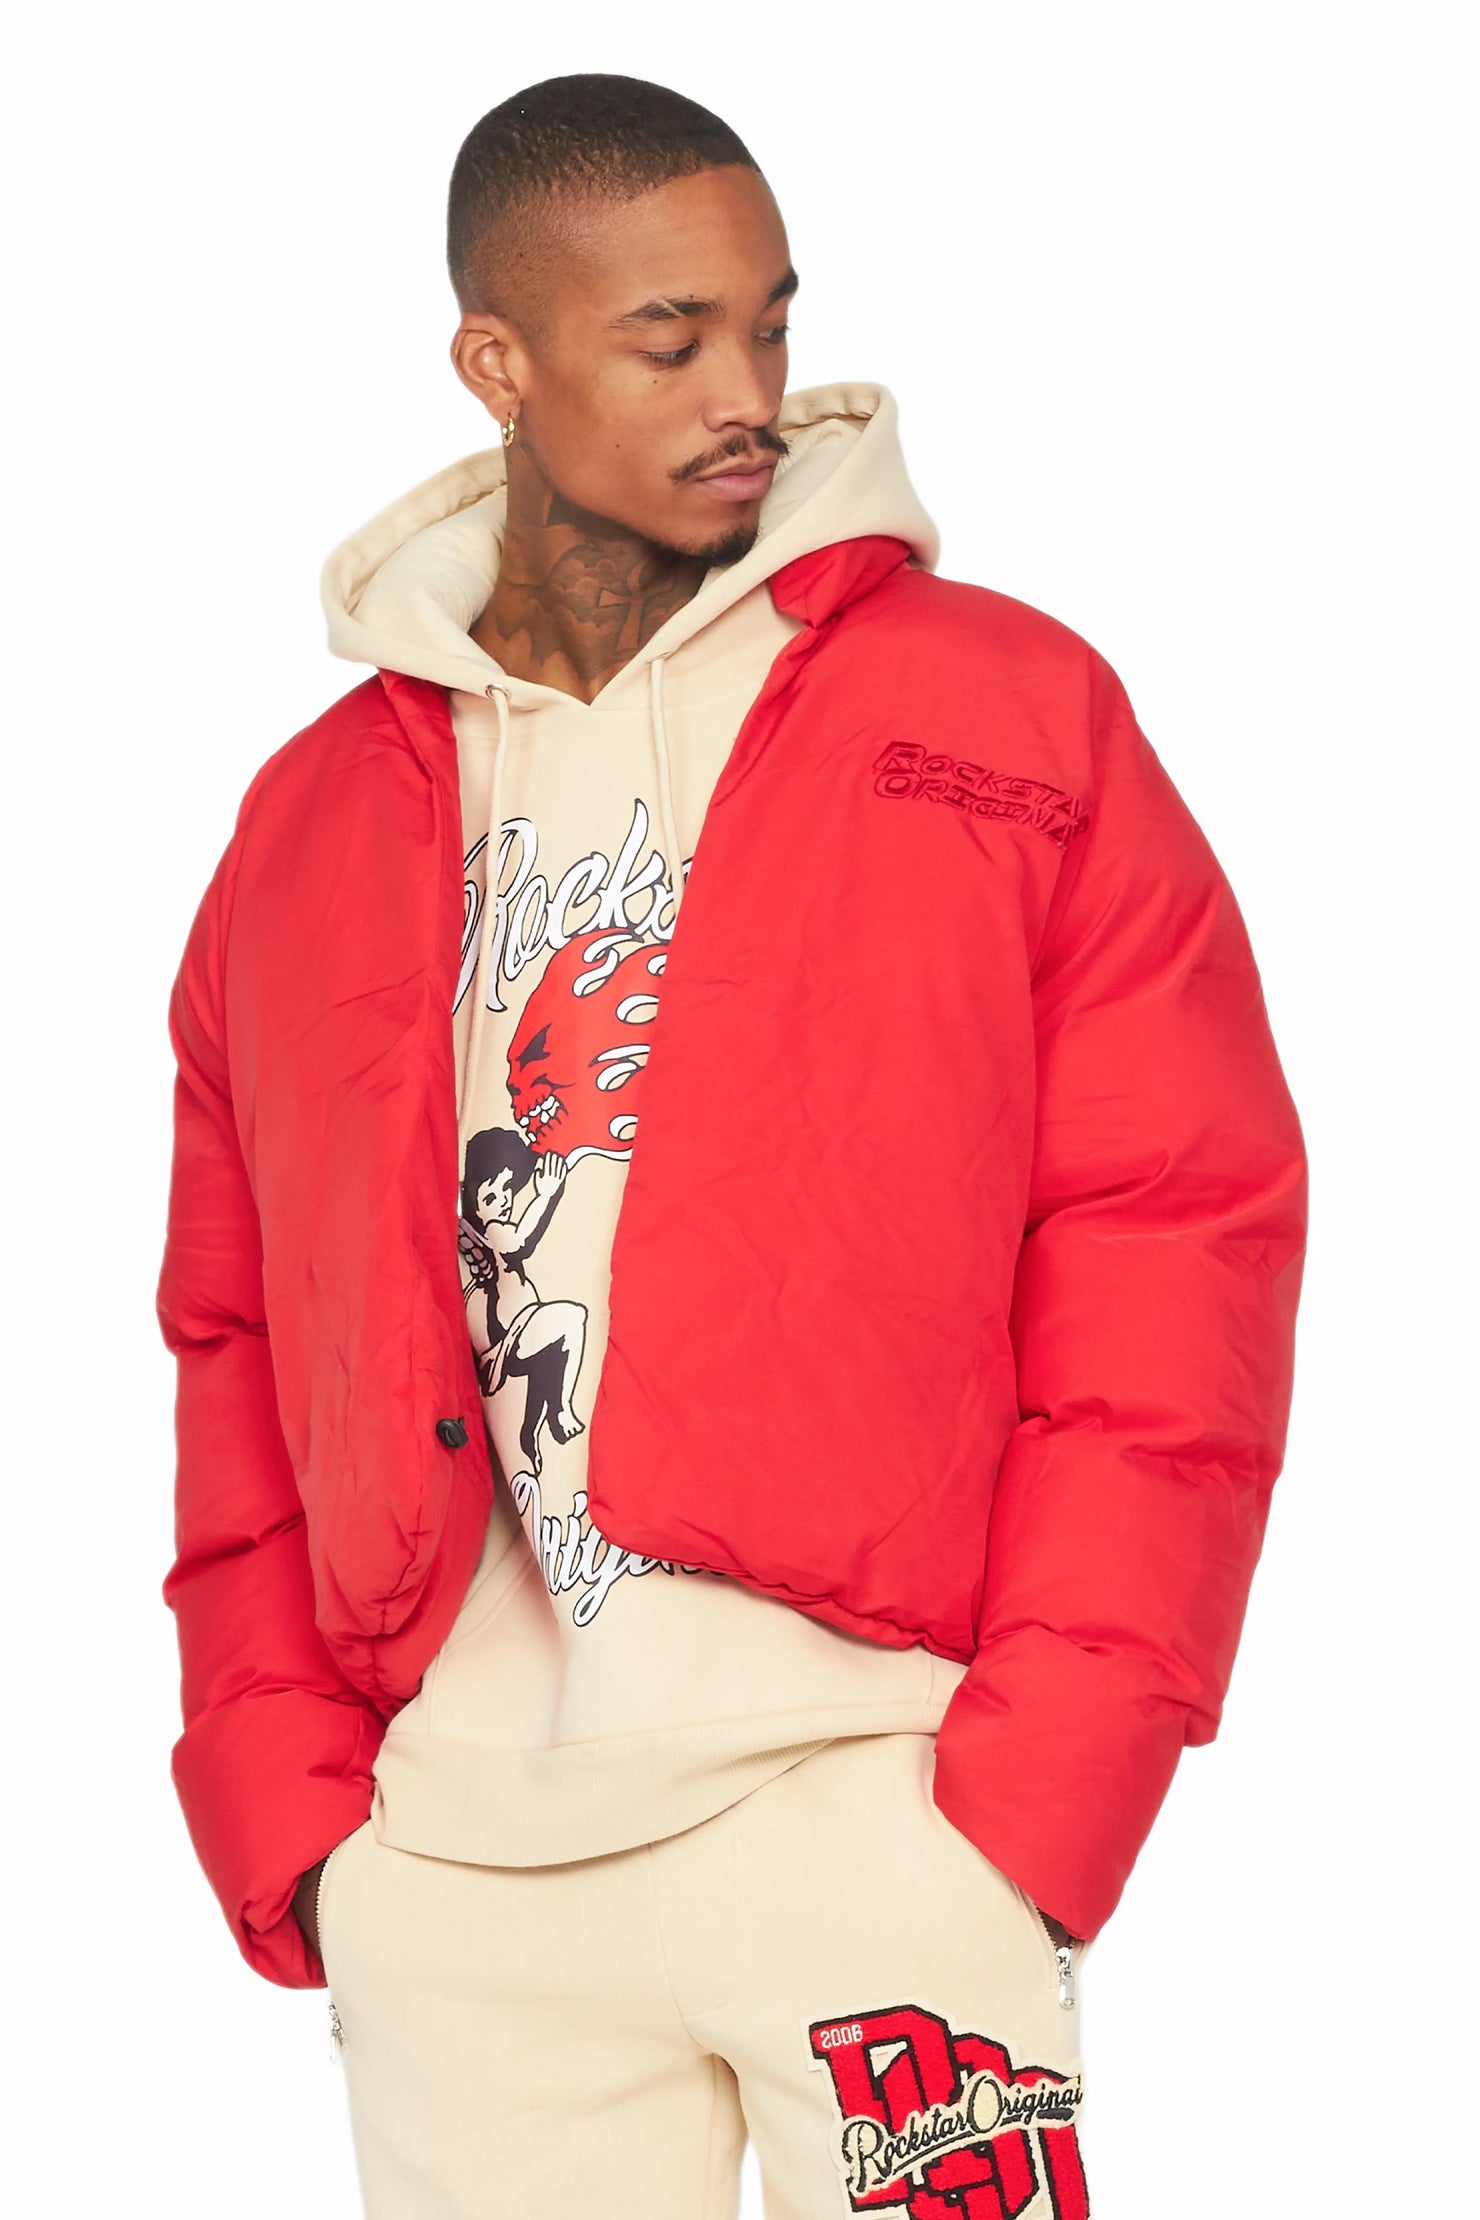 Damien Red Puffer Jacket